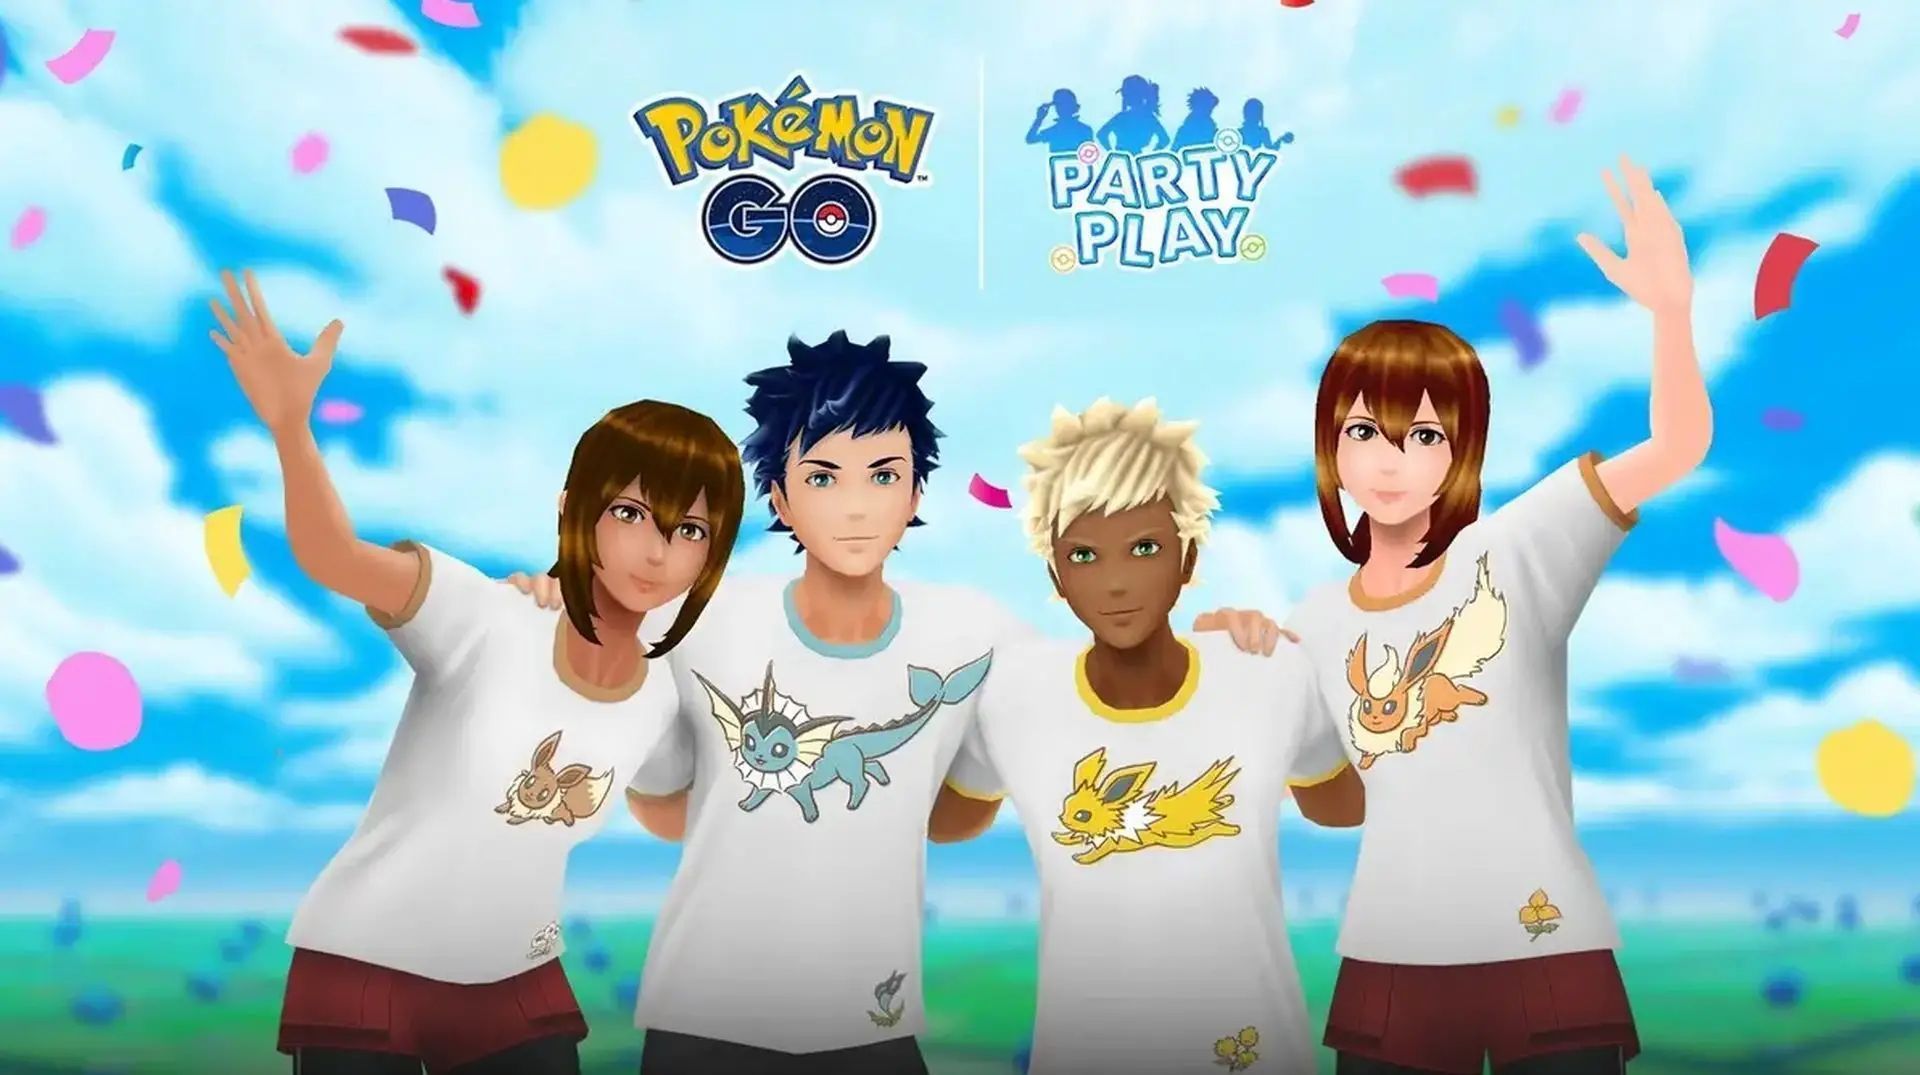 Desafíos del grupo Pokémon GO